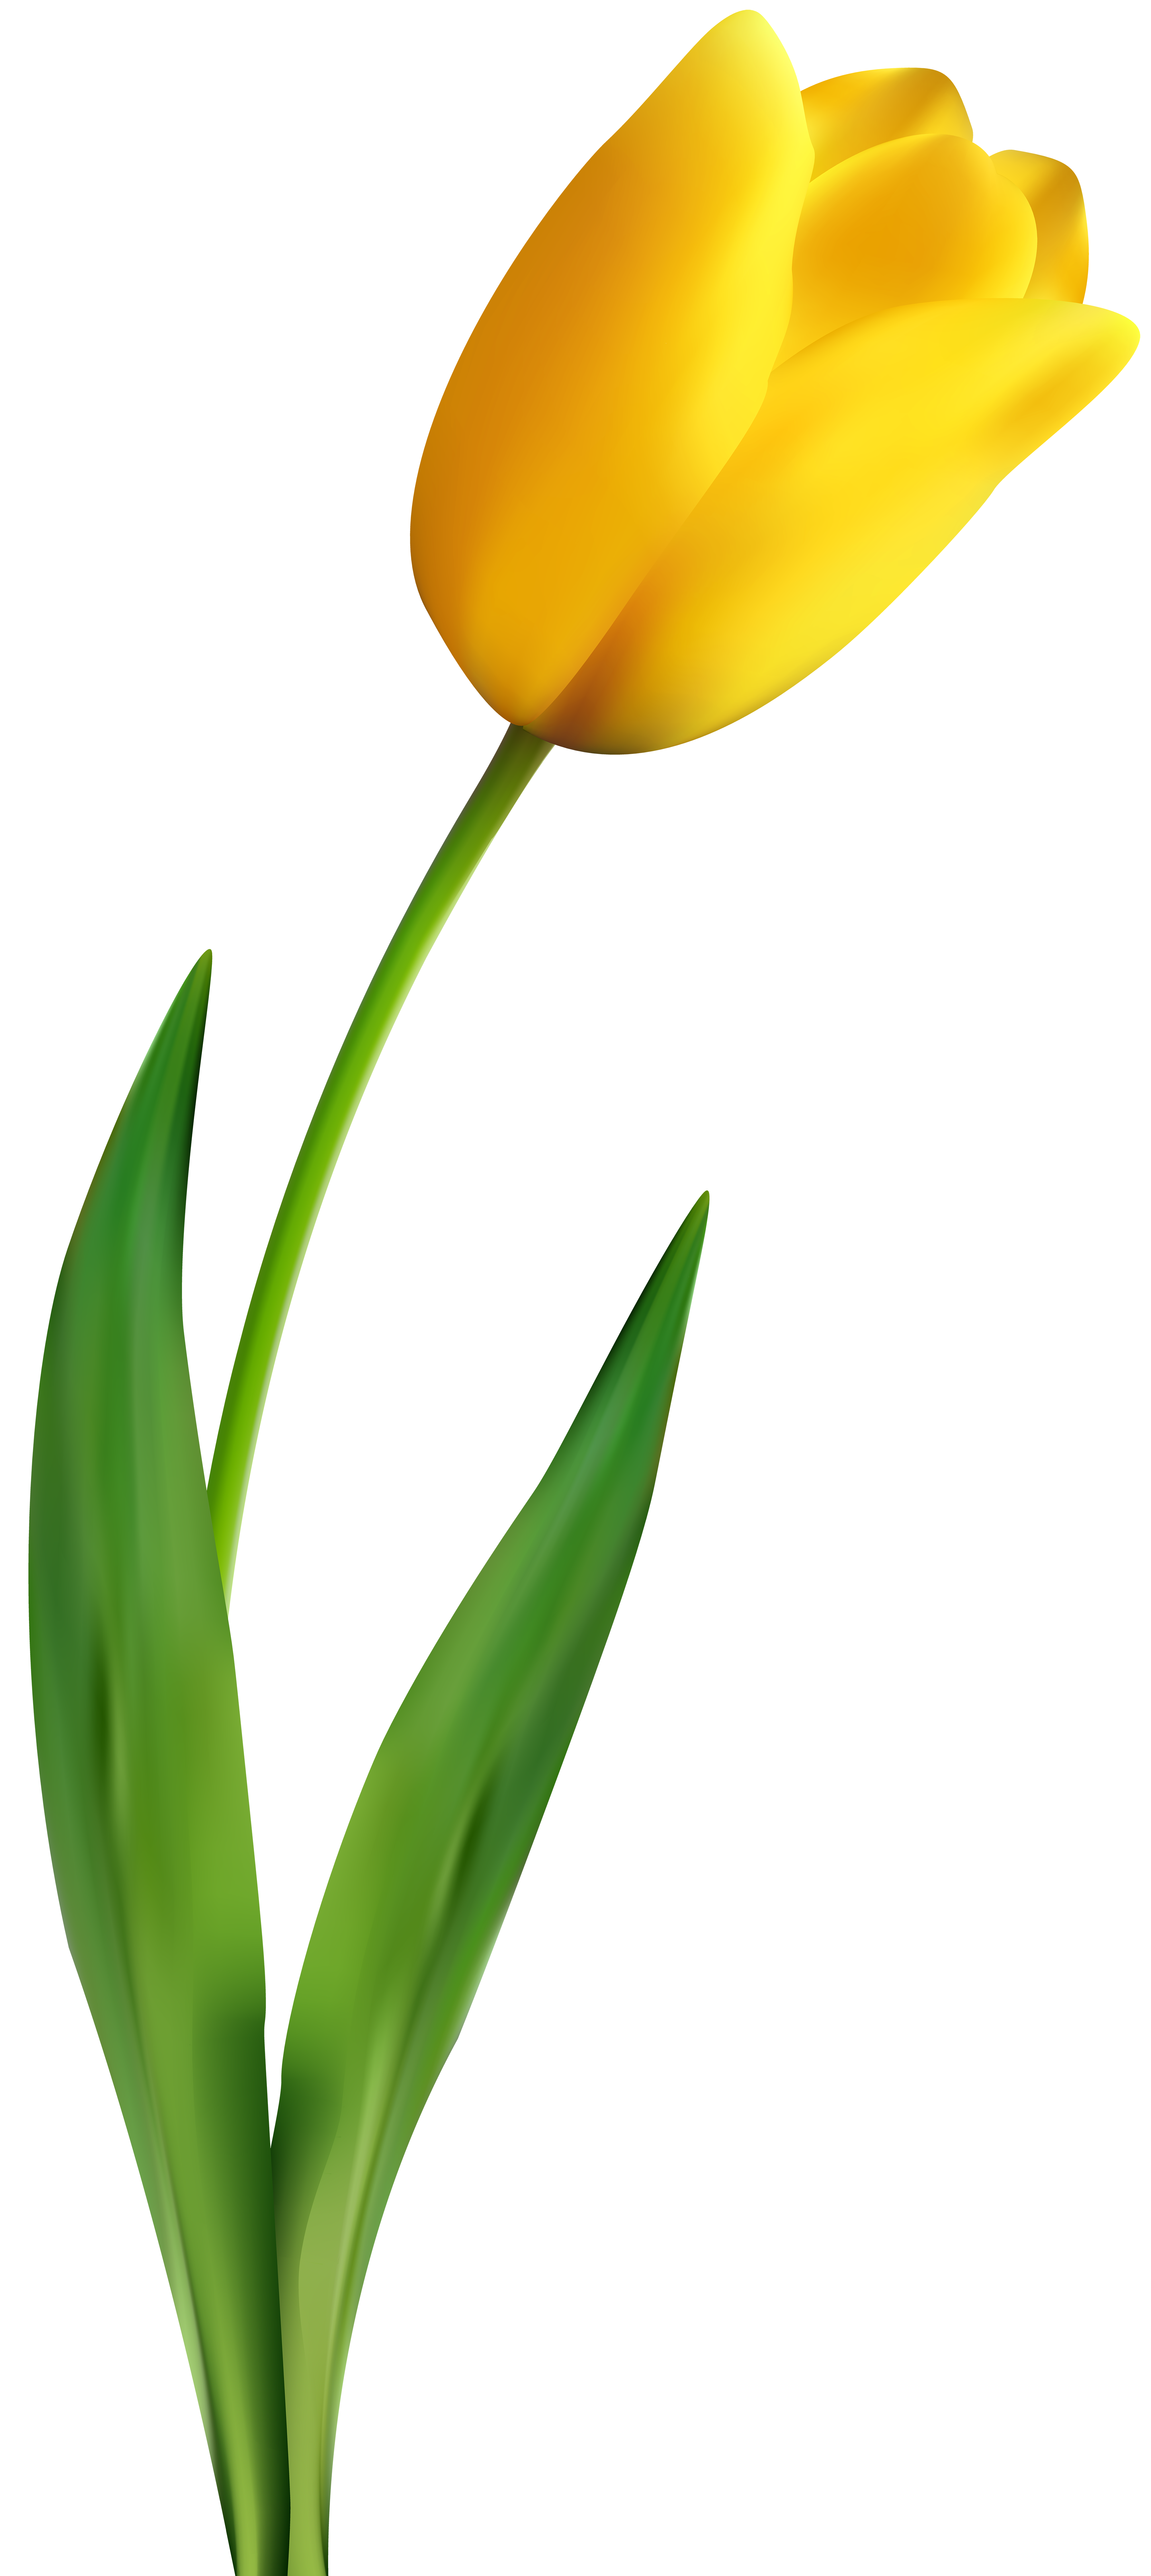 Yellow Tulip Transparent Clip Art Image | Gallery Yopriceville ...